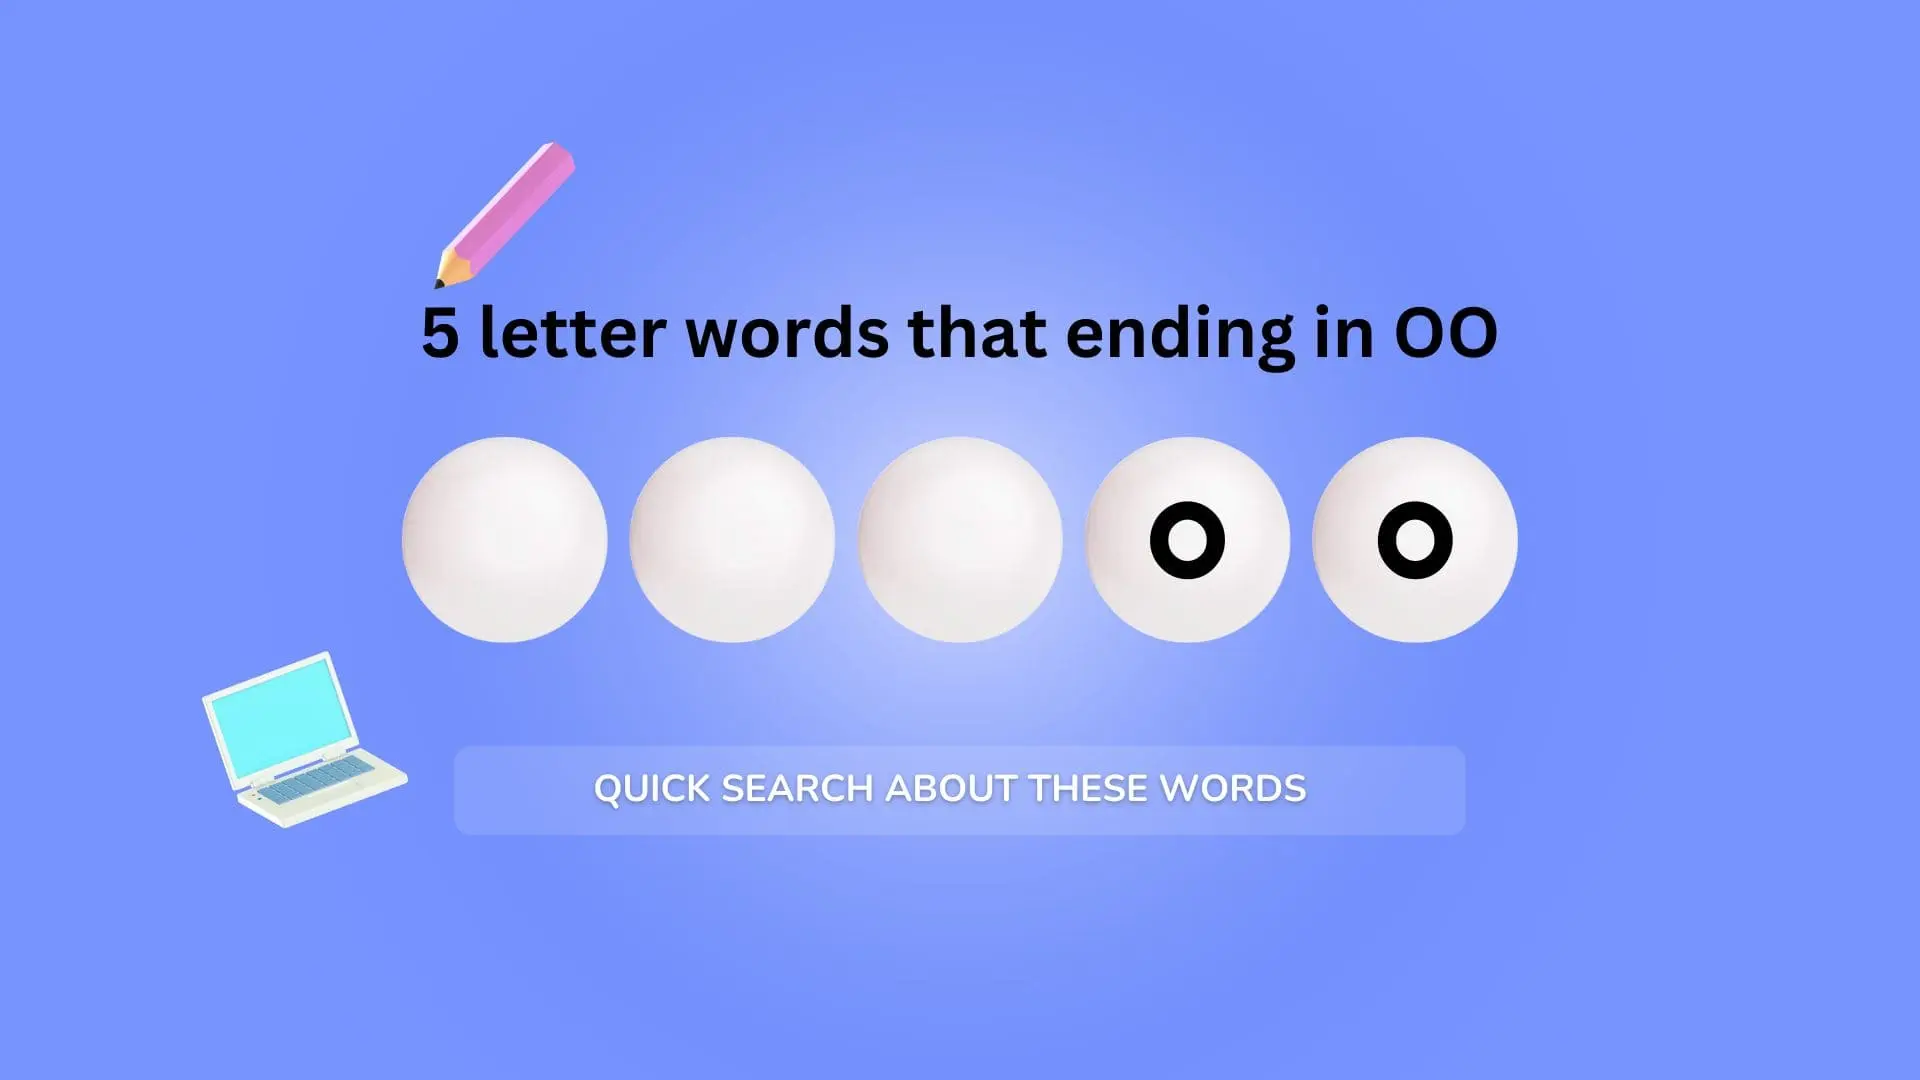 Explain the Charm of 5 letter words ending in OO